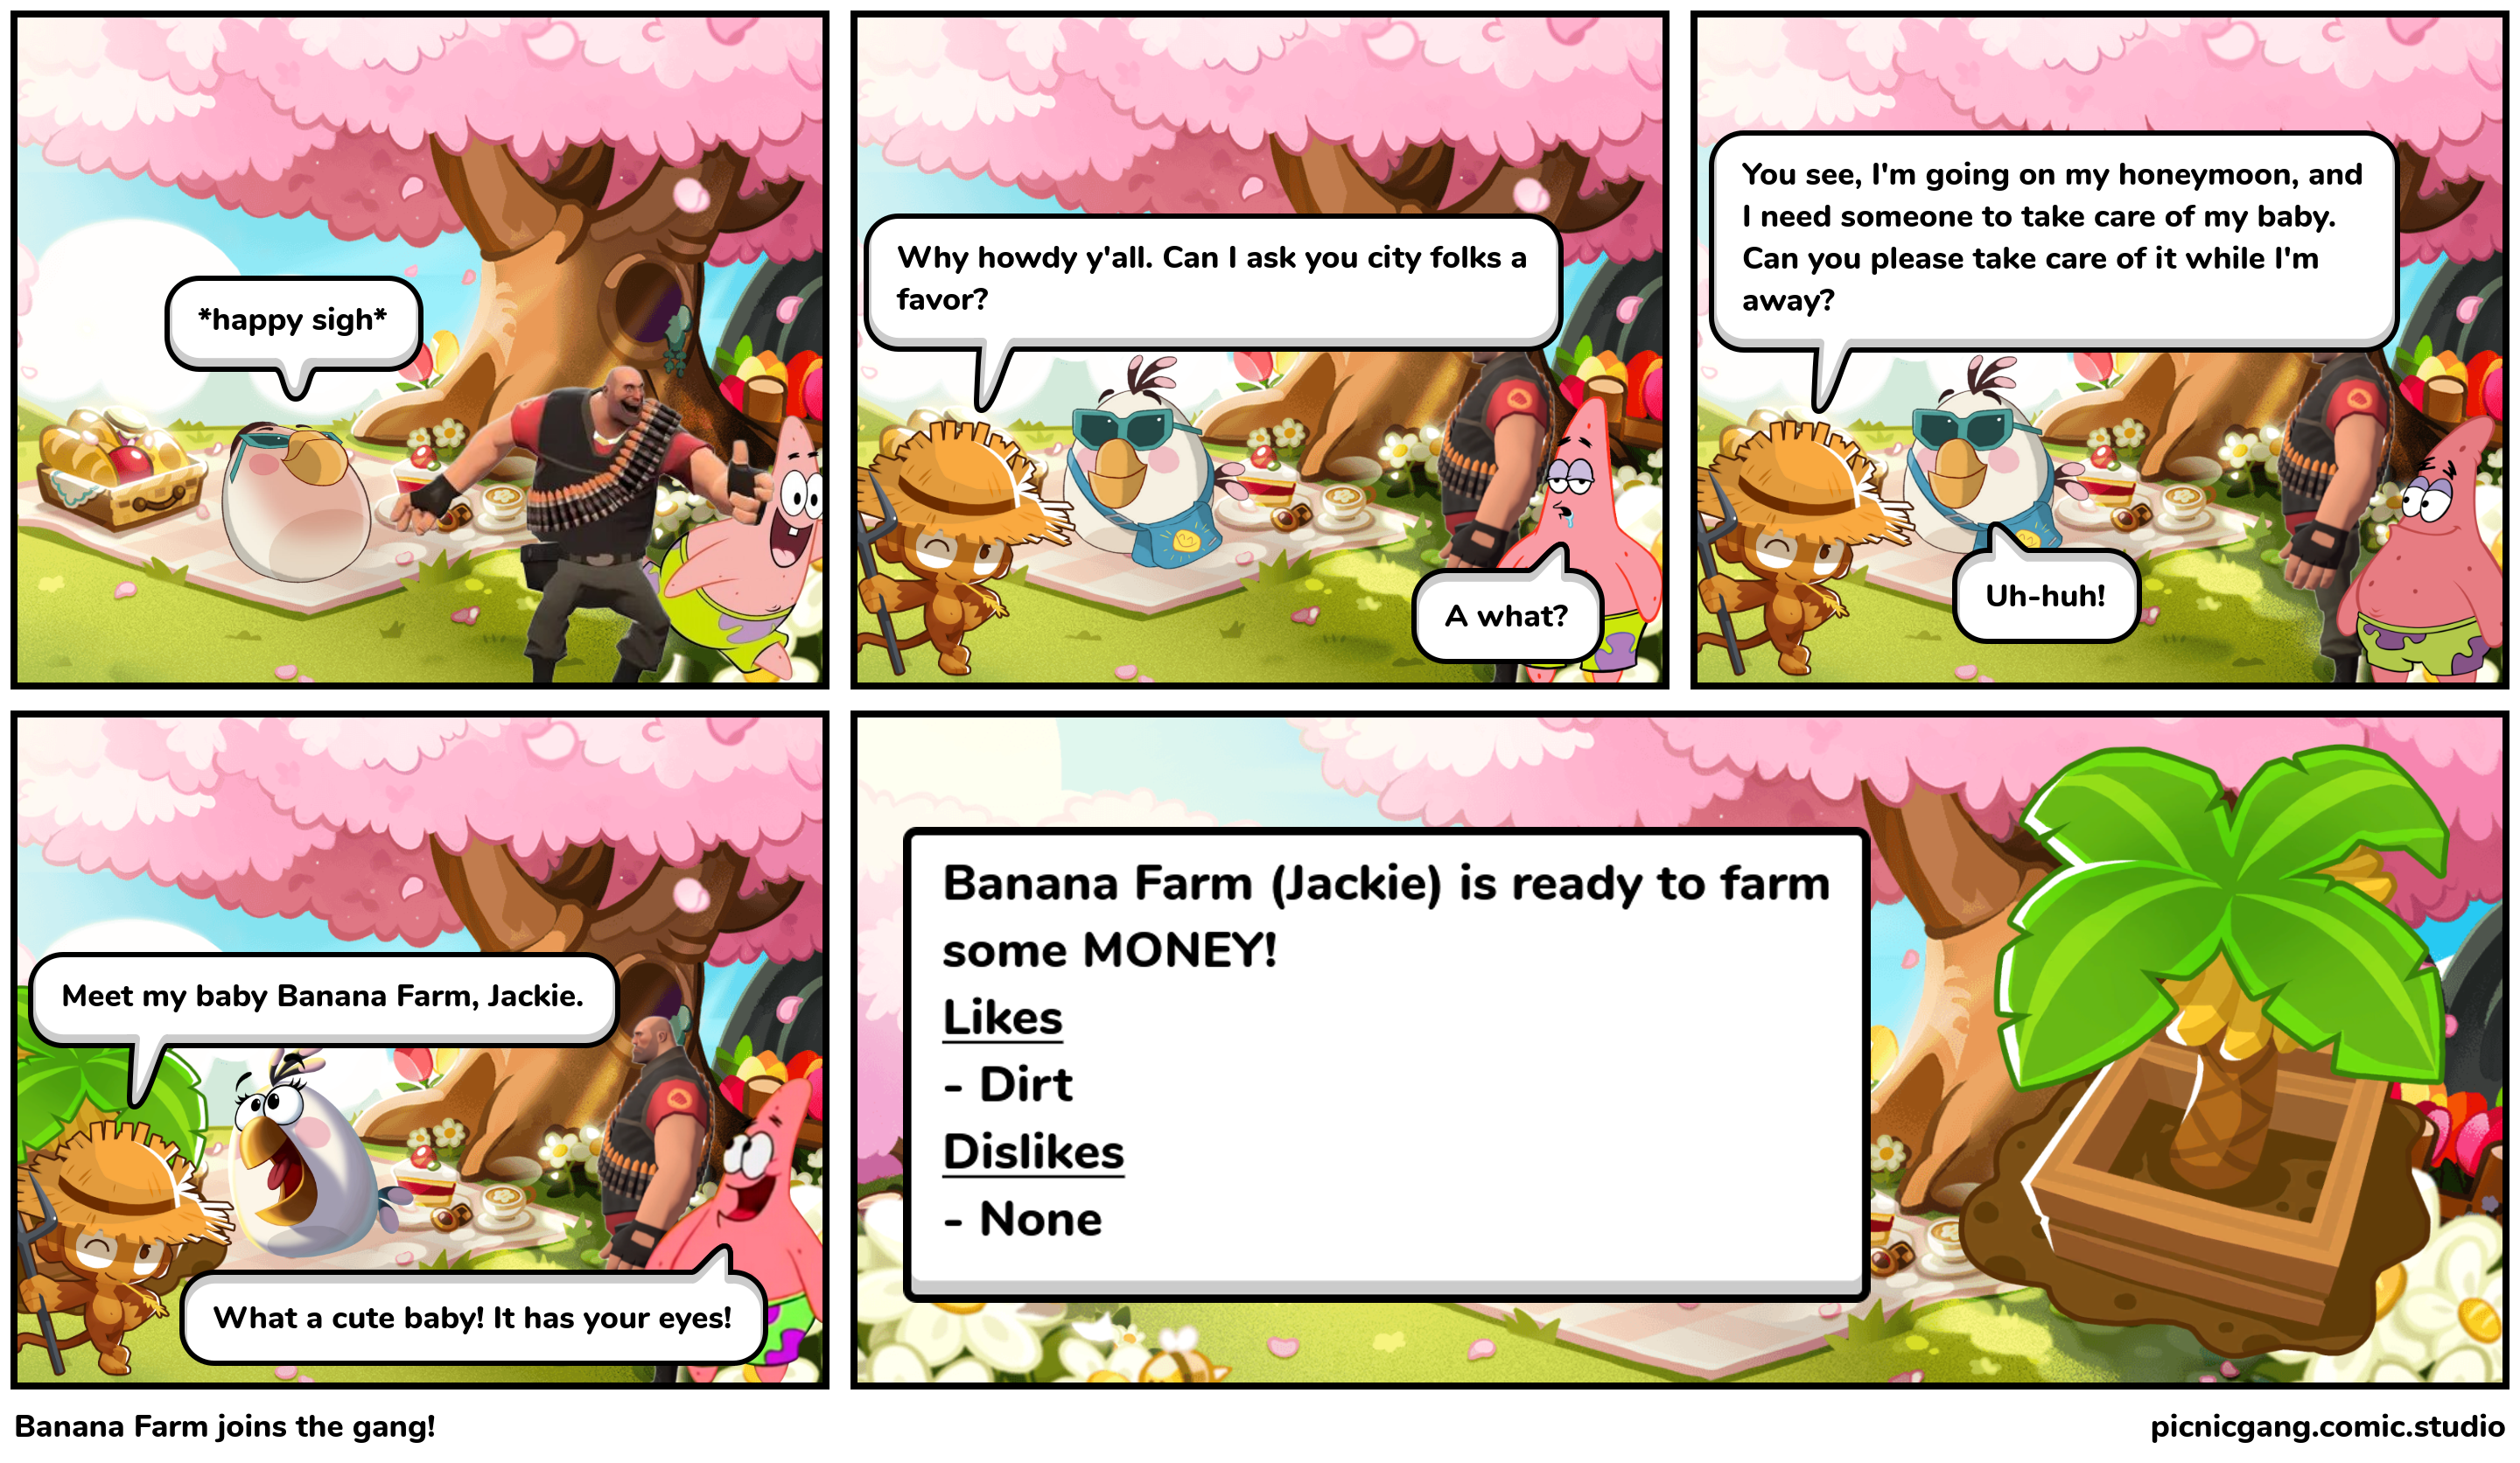 Banana Farm joins the gang!